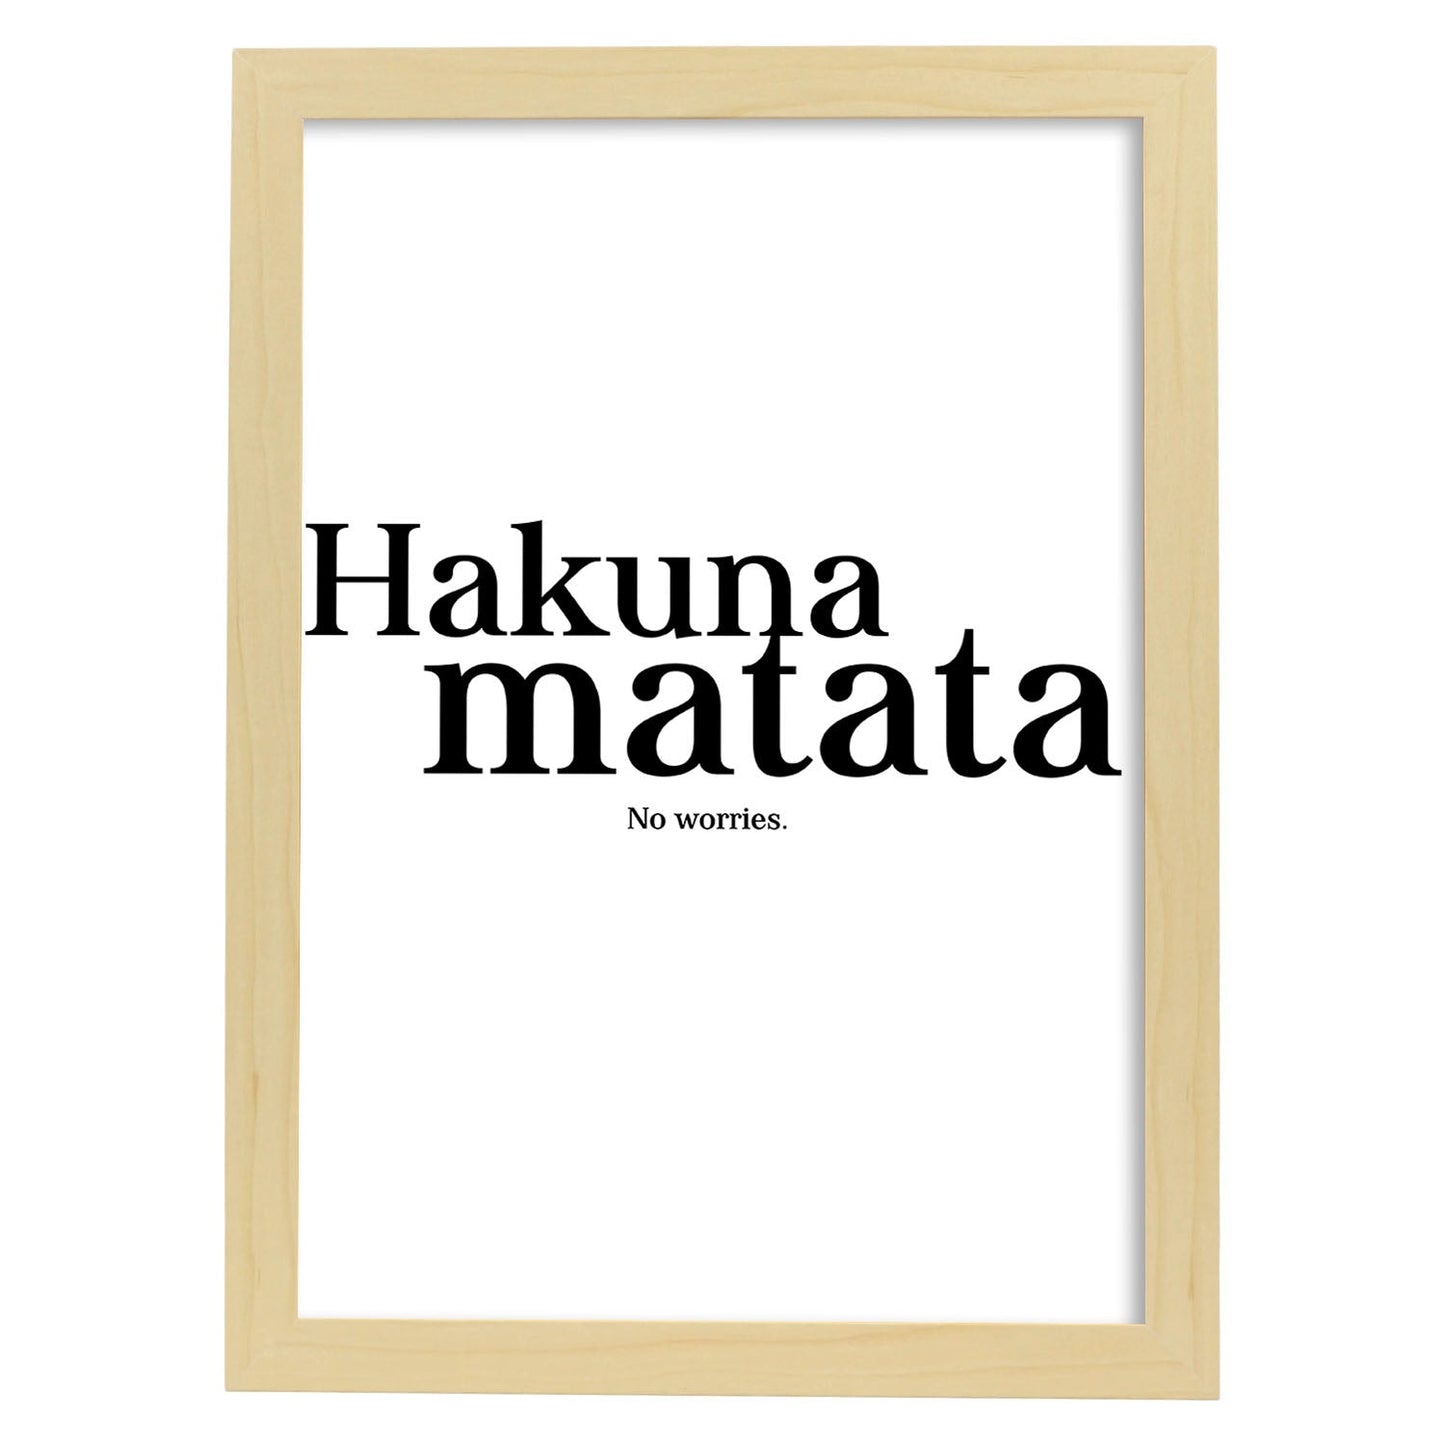 Lamina artistica decorativa con ilustración de hakuna matata estilo Mensaje inspiracional-Artwork-Nacnic-A4-Marco Madera clara-Nacnic Estudio SL